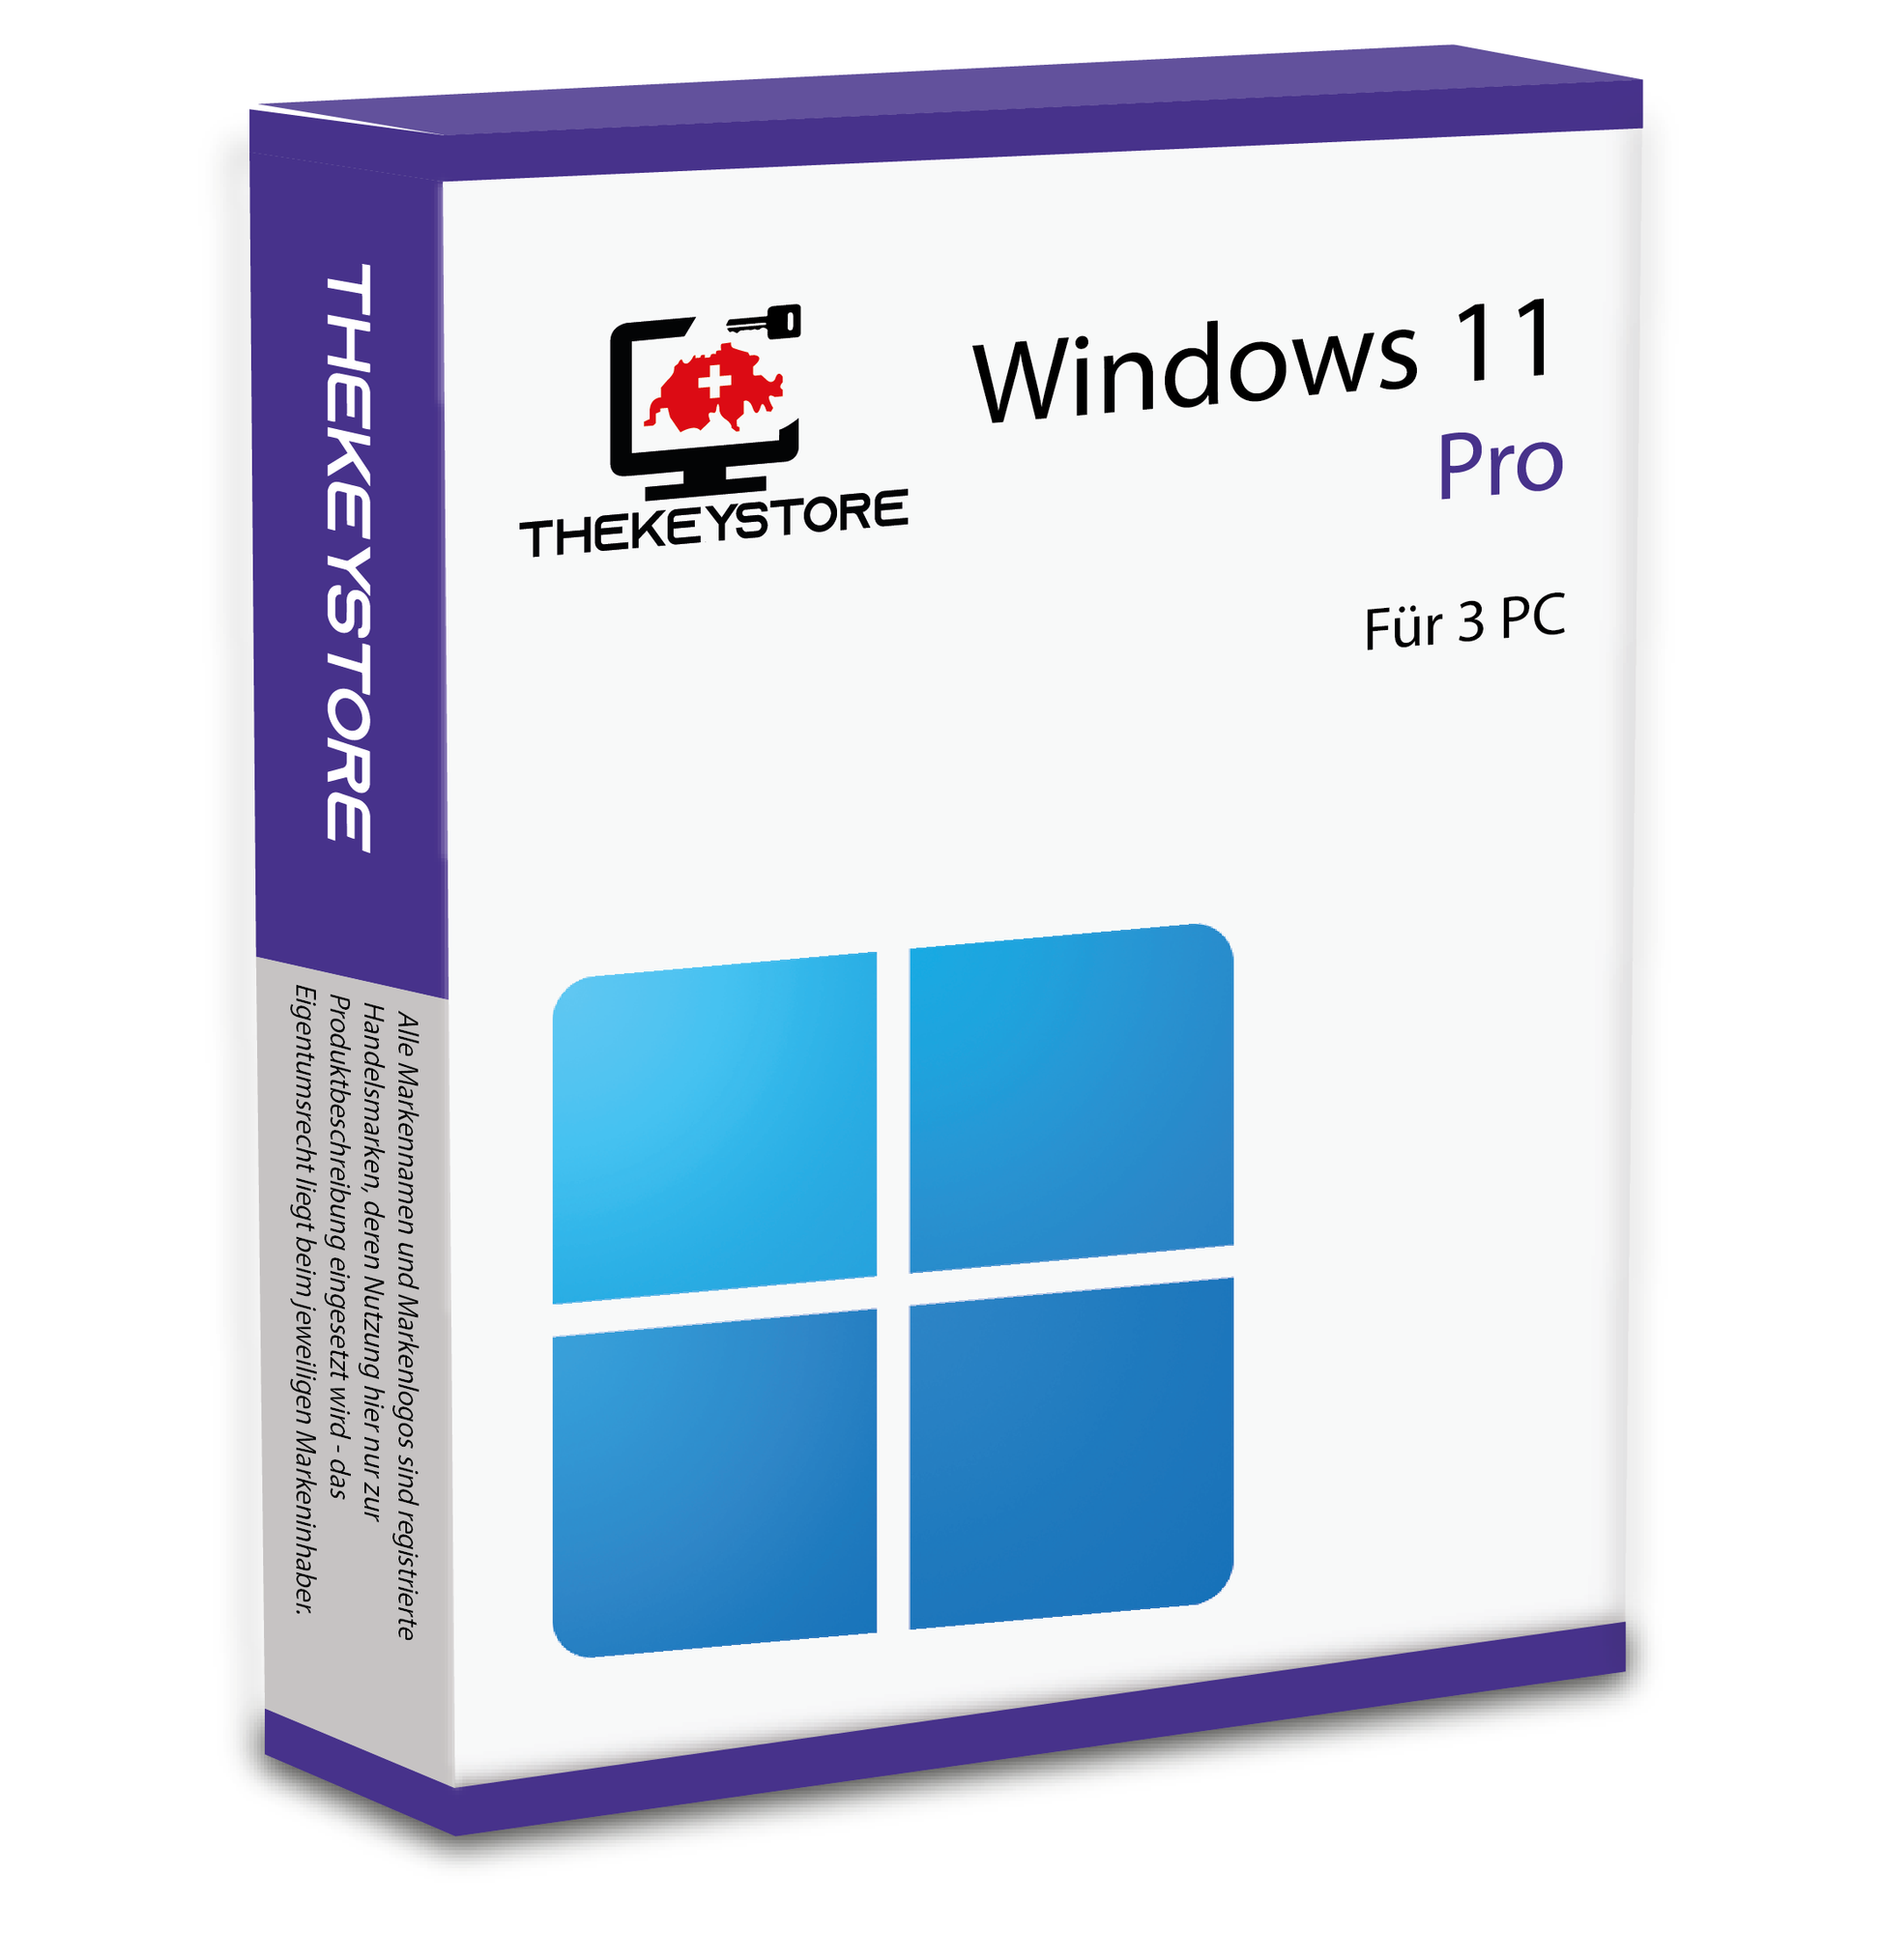 Microsoft Windows 11 Pro - Für 3 PC - TheKeyStore Schweiz